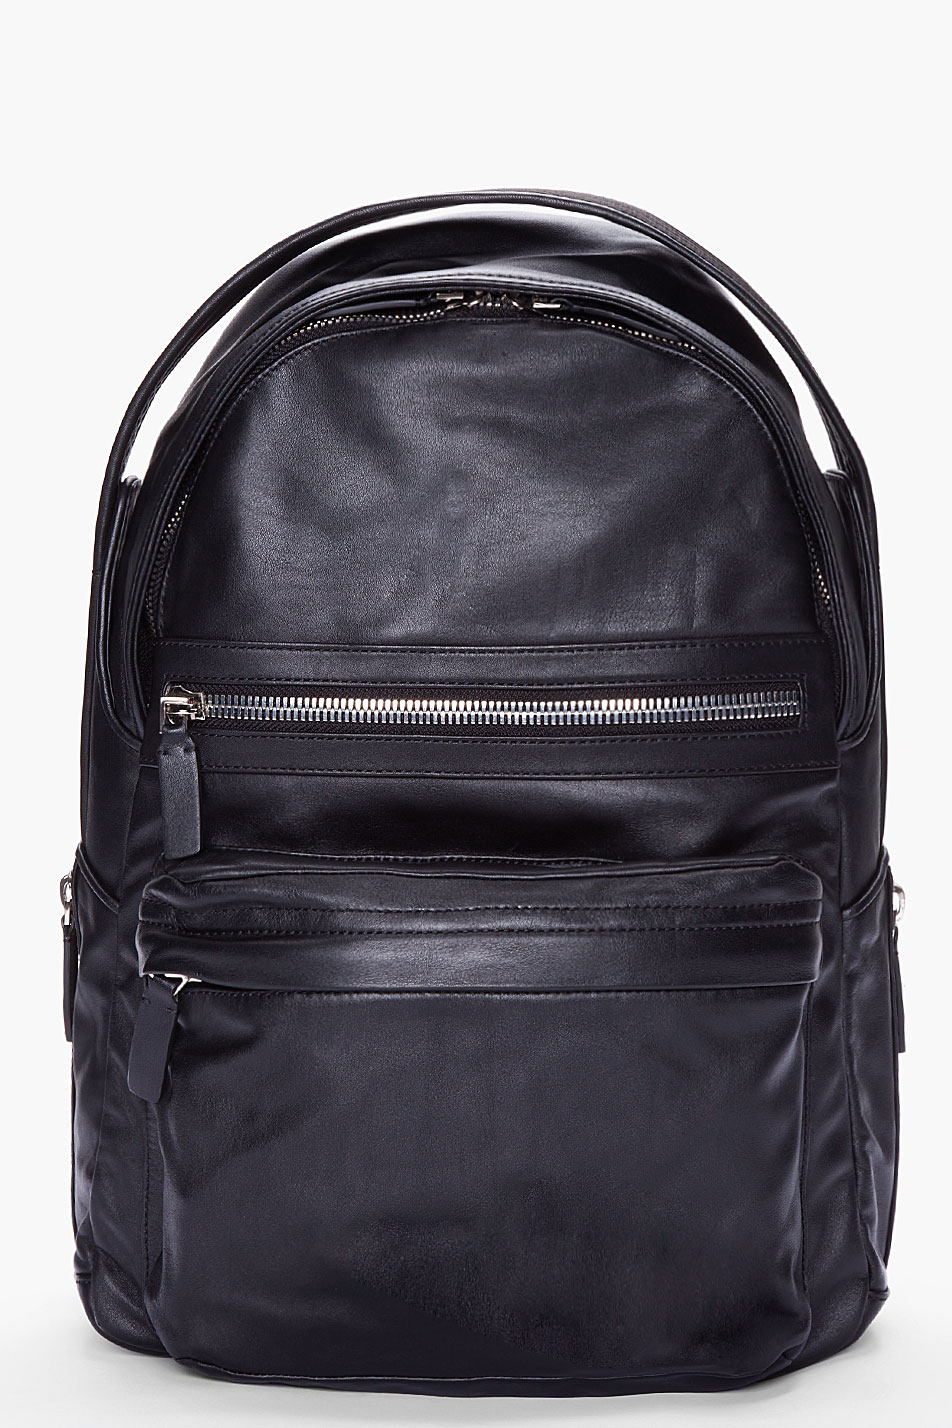 Alejandro Ingelmo Black Leather Berlin Backpack in Black for Men | Lyst